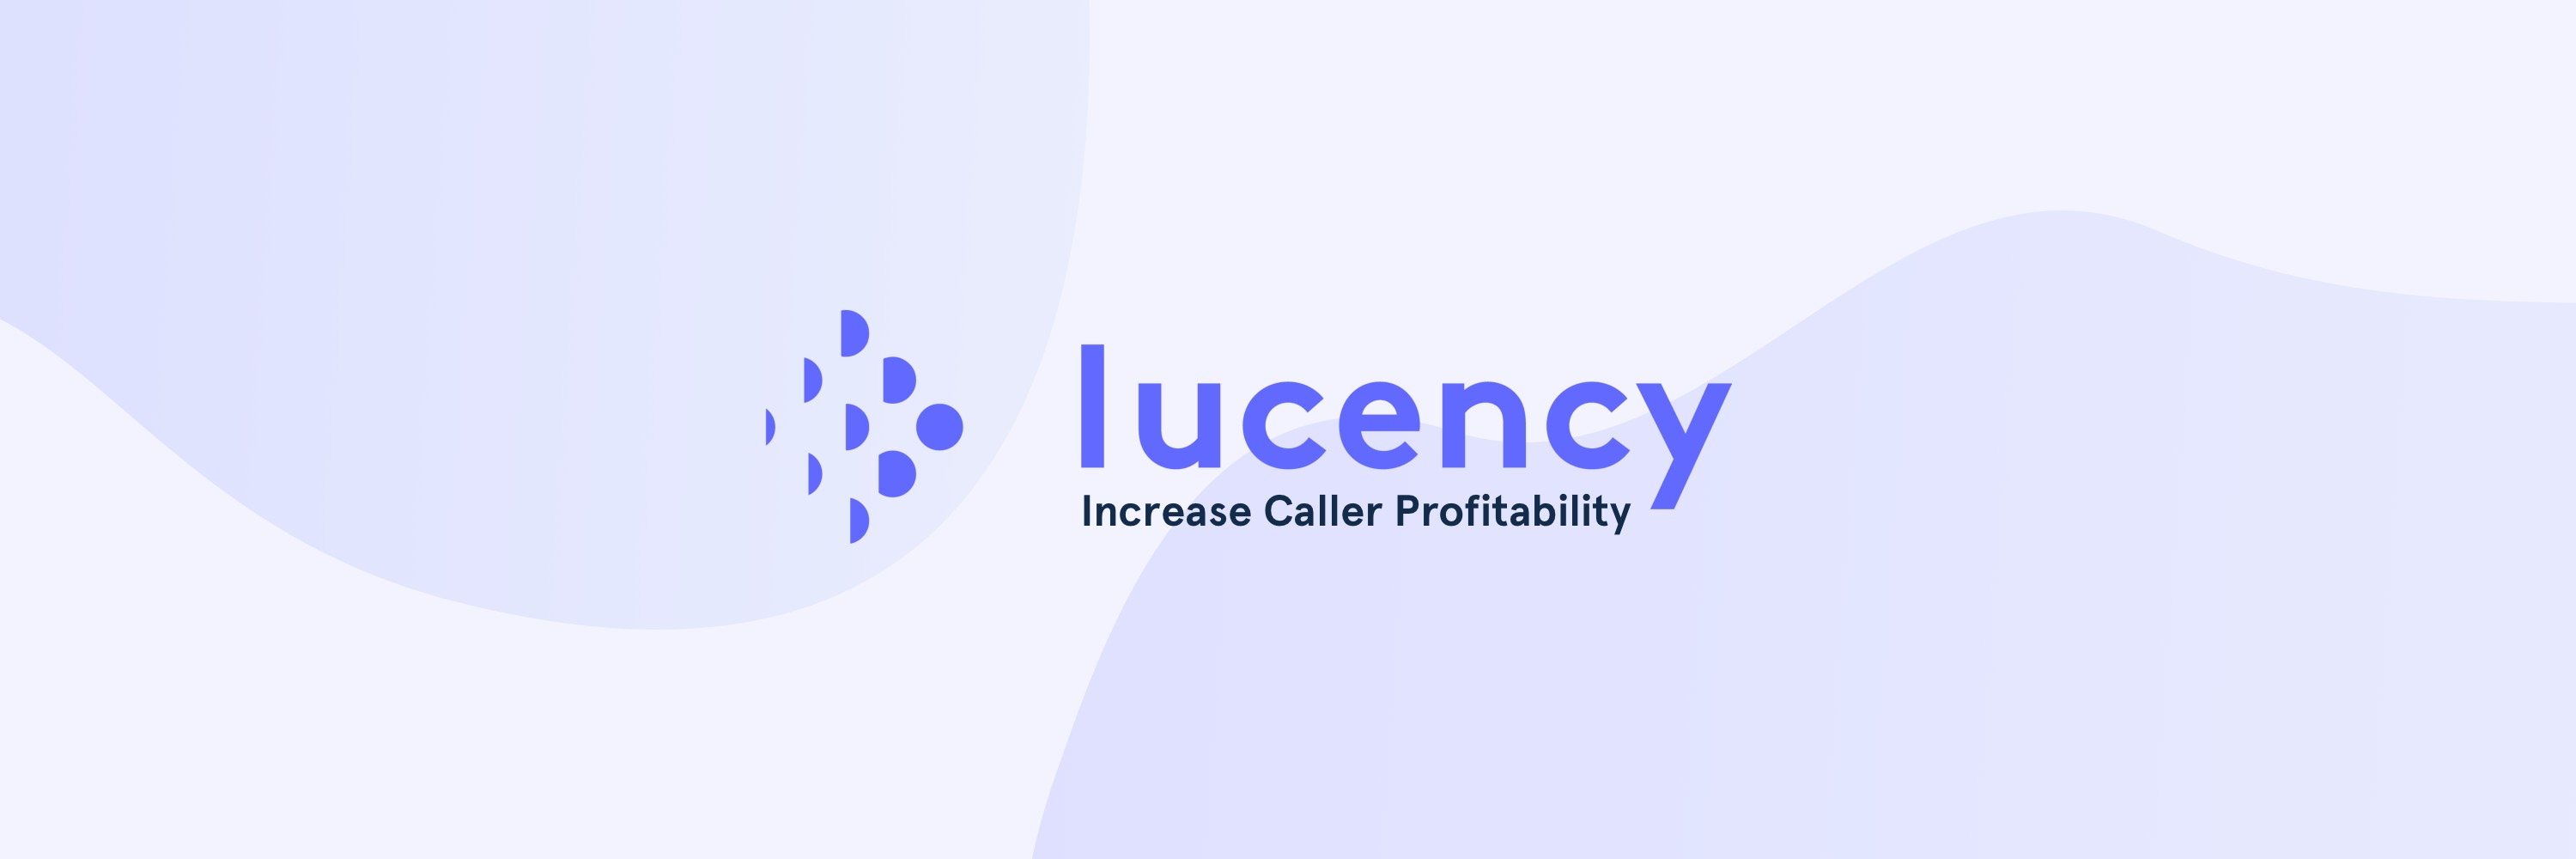 Lucency | LinkedIn